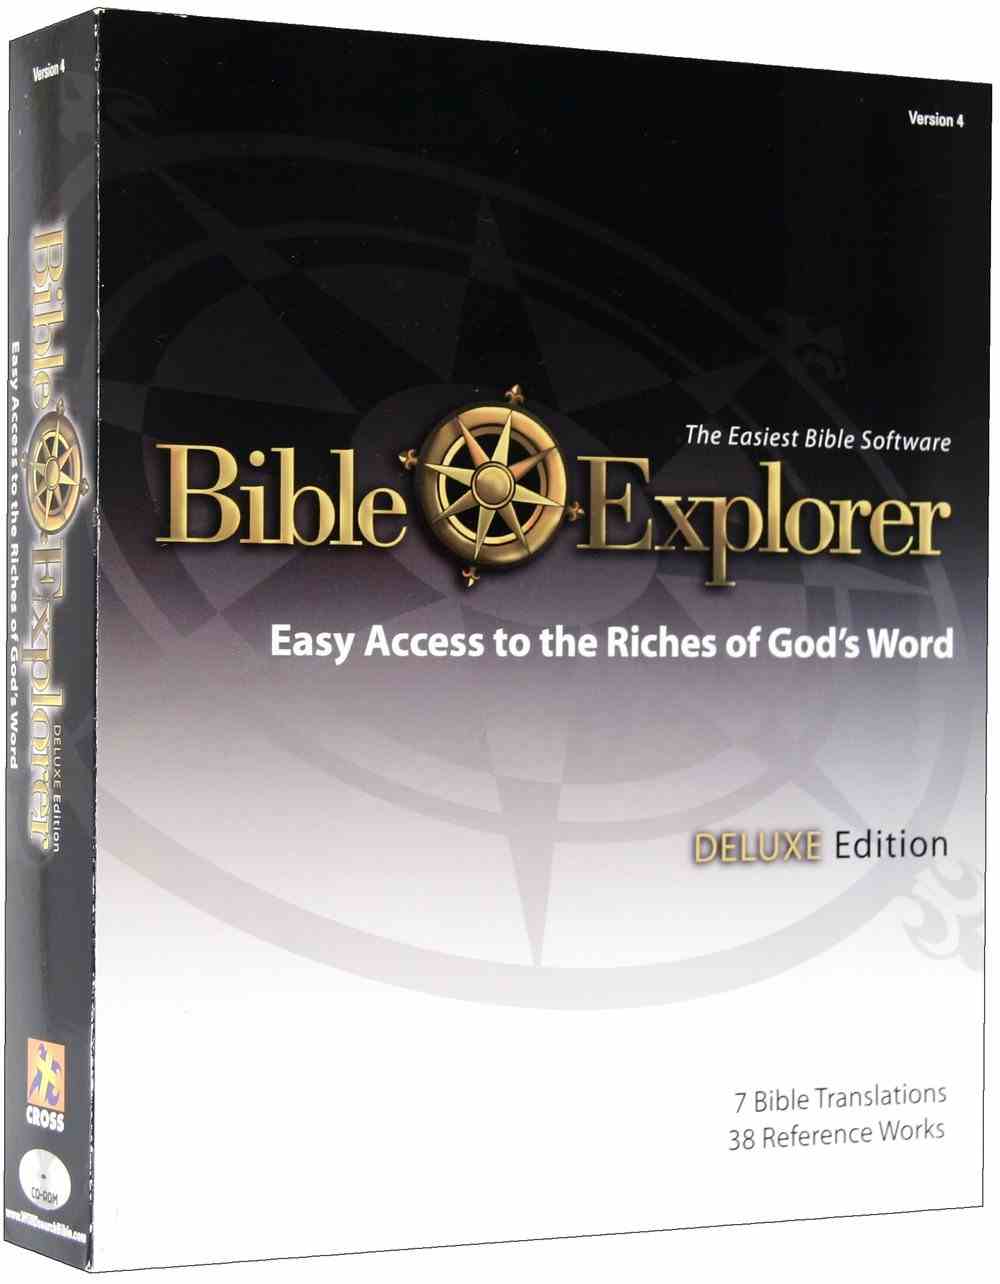 bible explorer 4.0 free edition